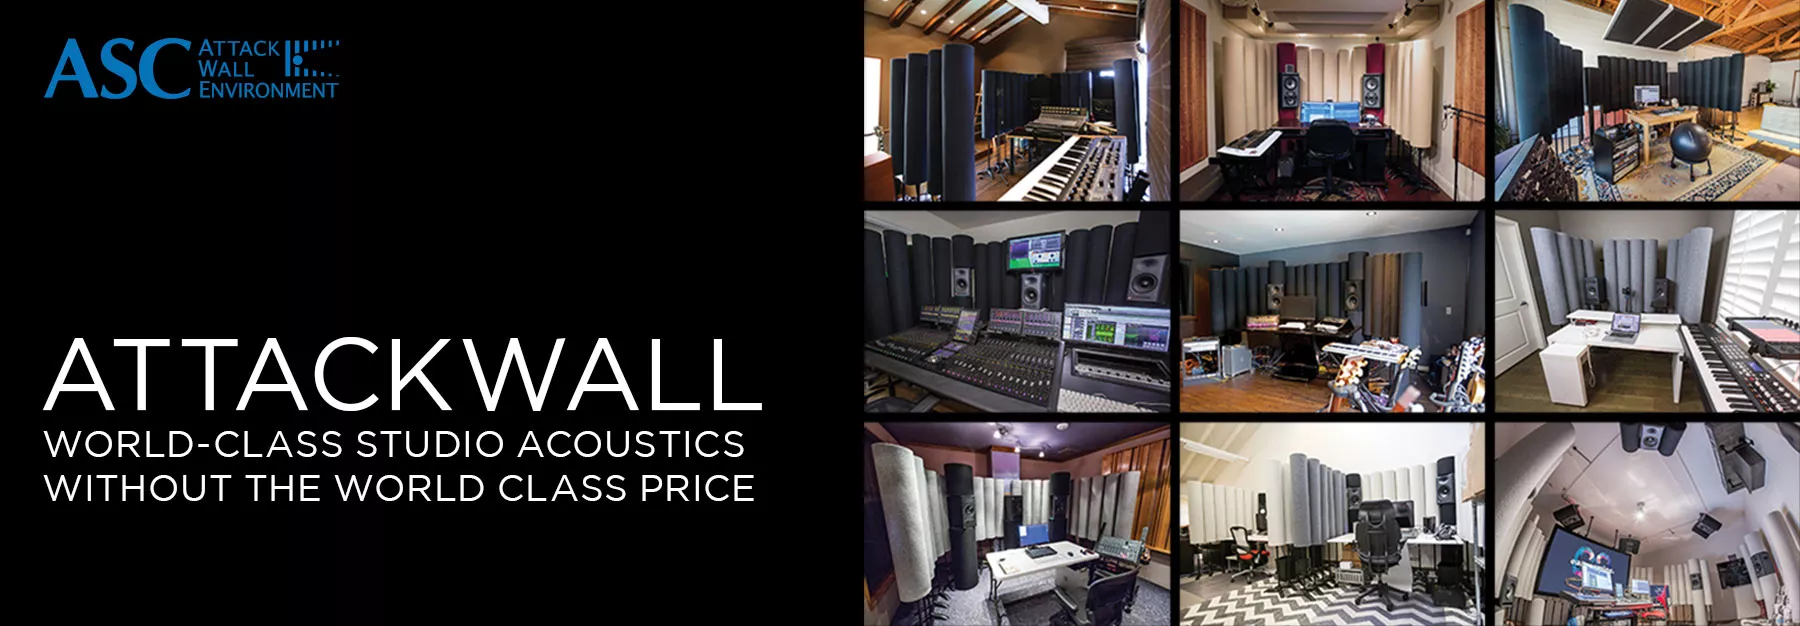 Attackwall World Class Studio Acoustics